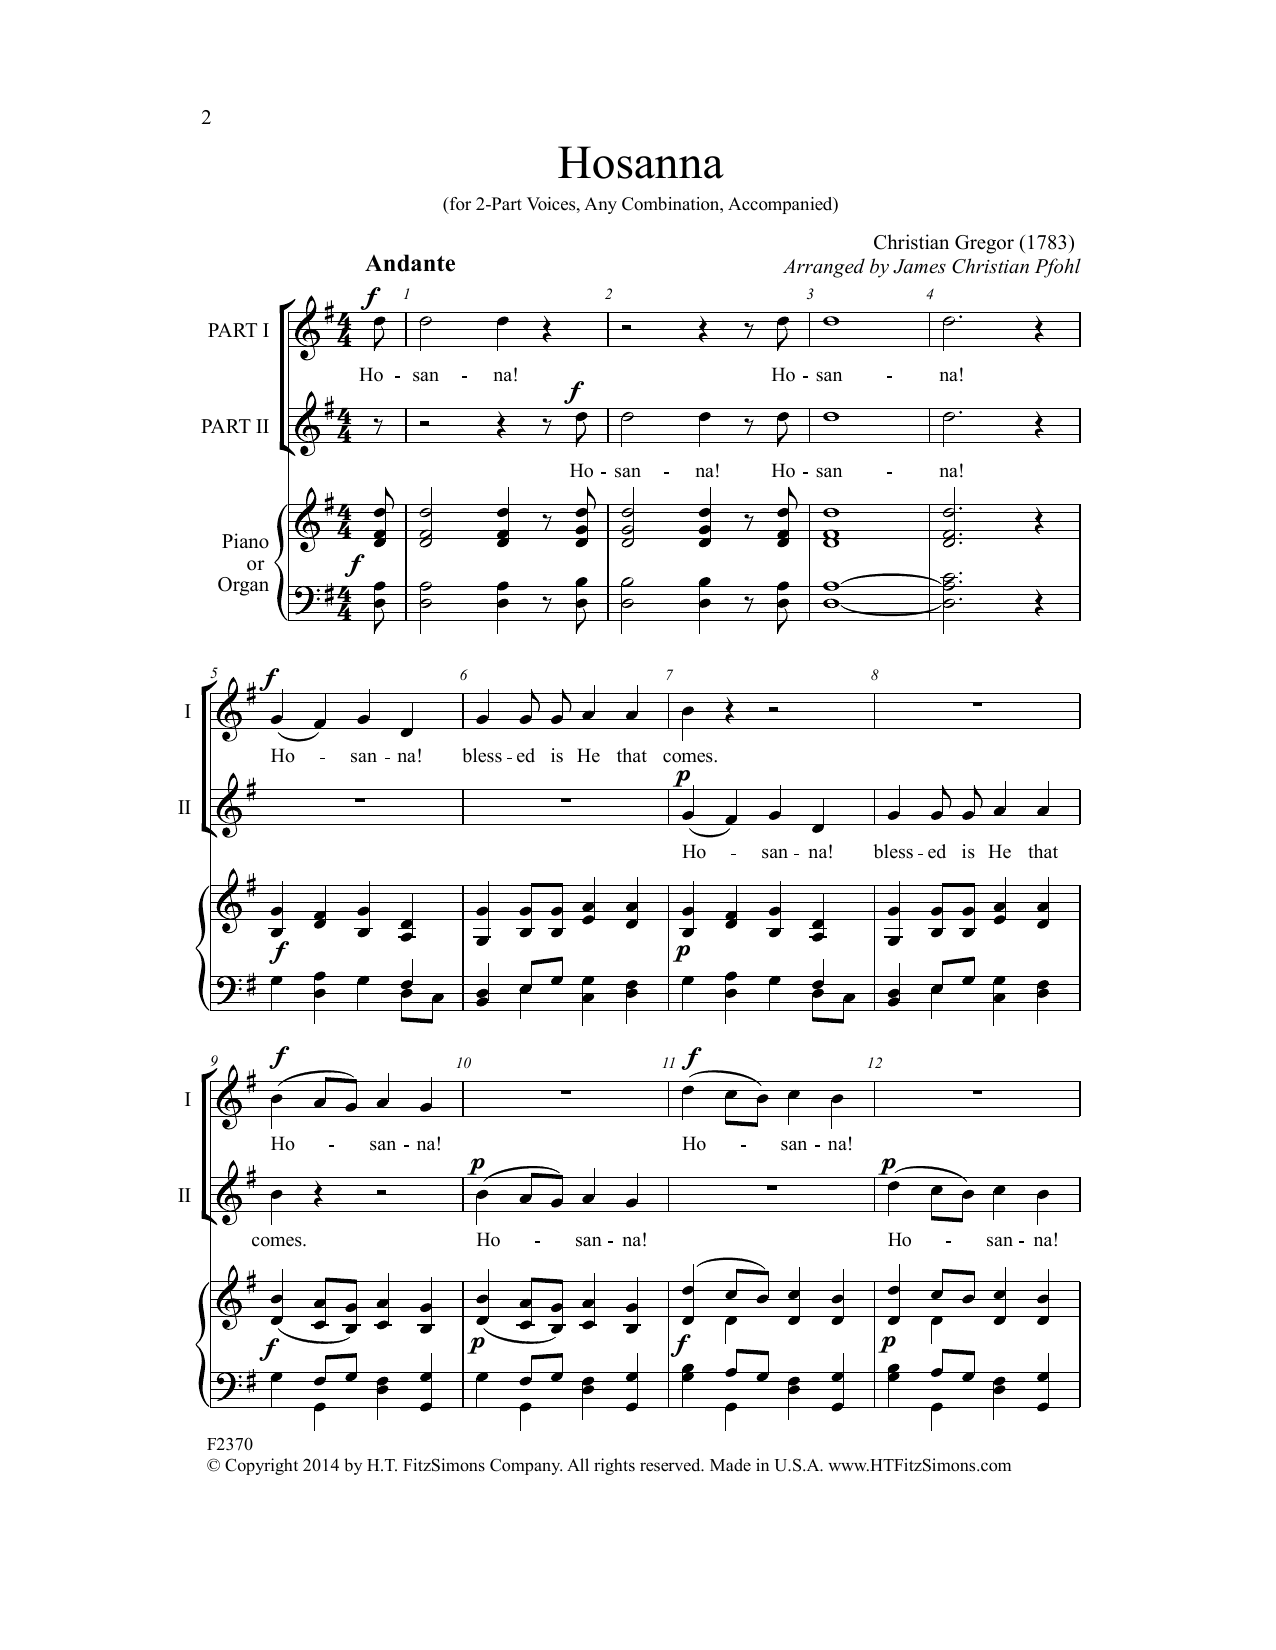 Christian Gregor Hosanna (arr. James Christian Pfohl) Sheet Music Notes & Chords for 2-Part Choir - Download or Print PDF